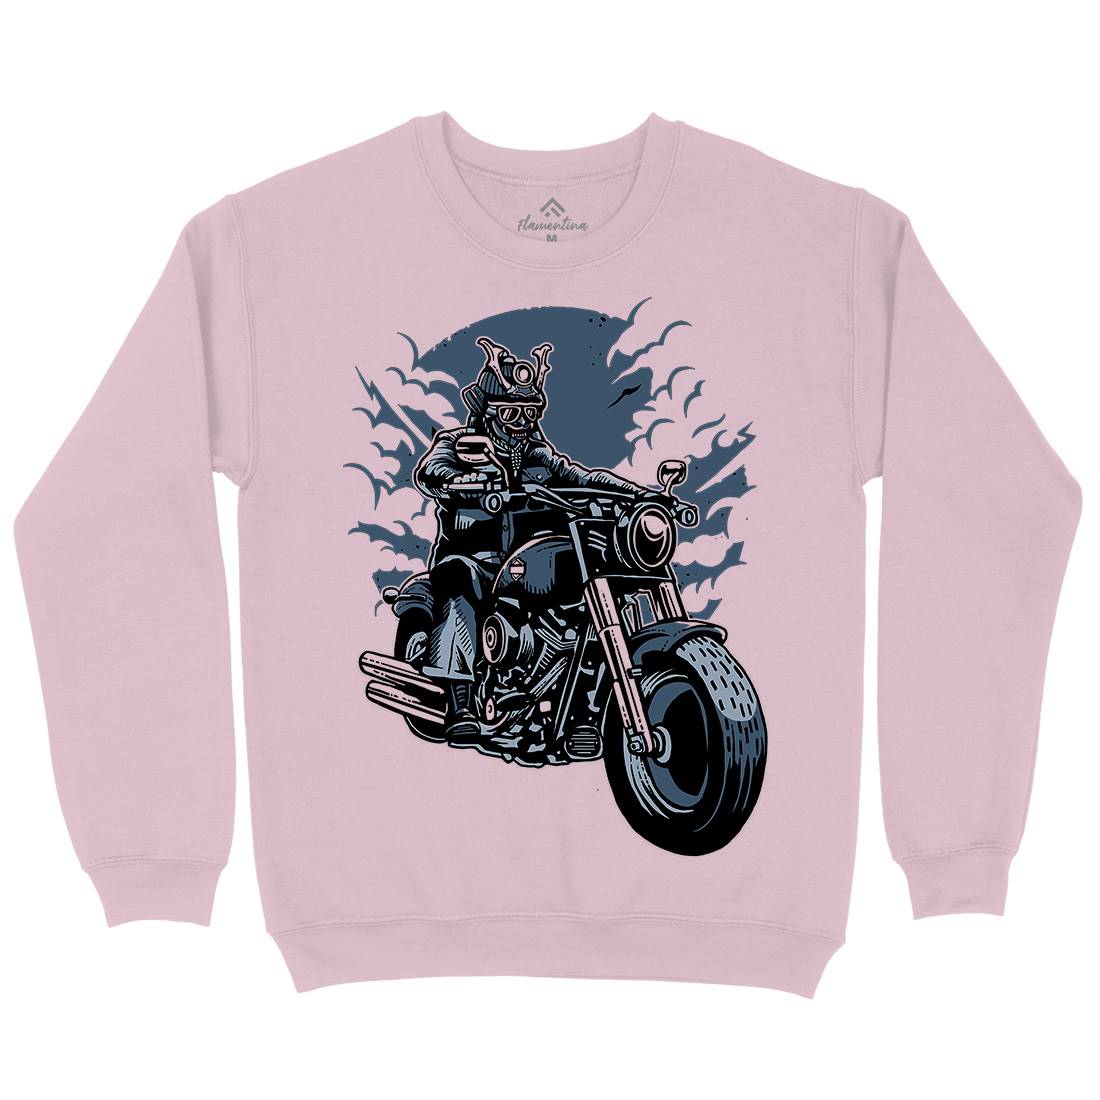 Samurai Ride Kids Crew Neck Sweatshirt Warriors A568